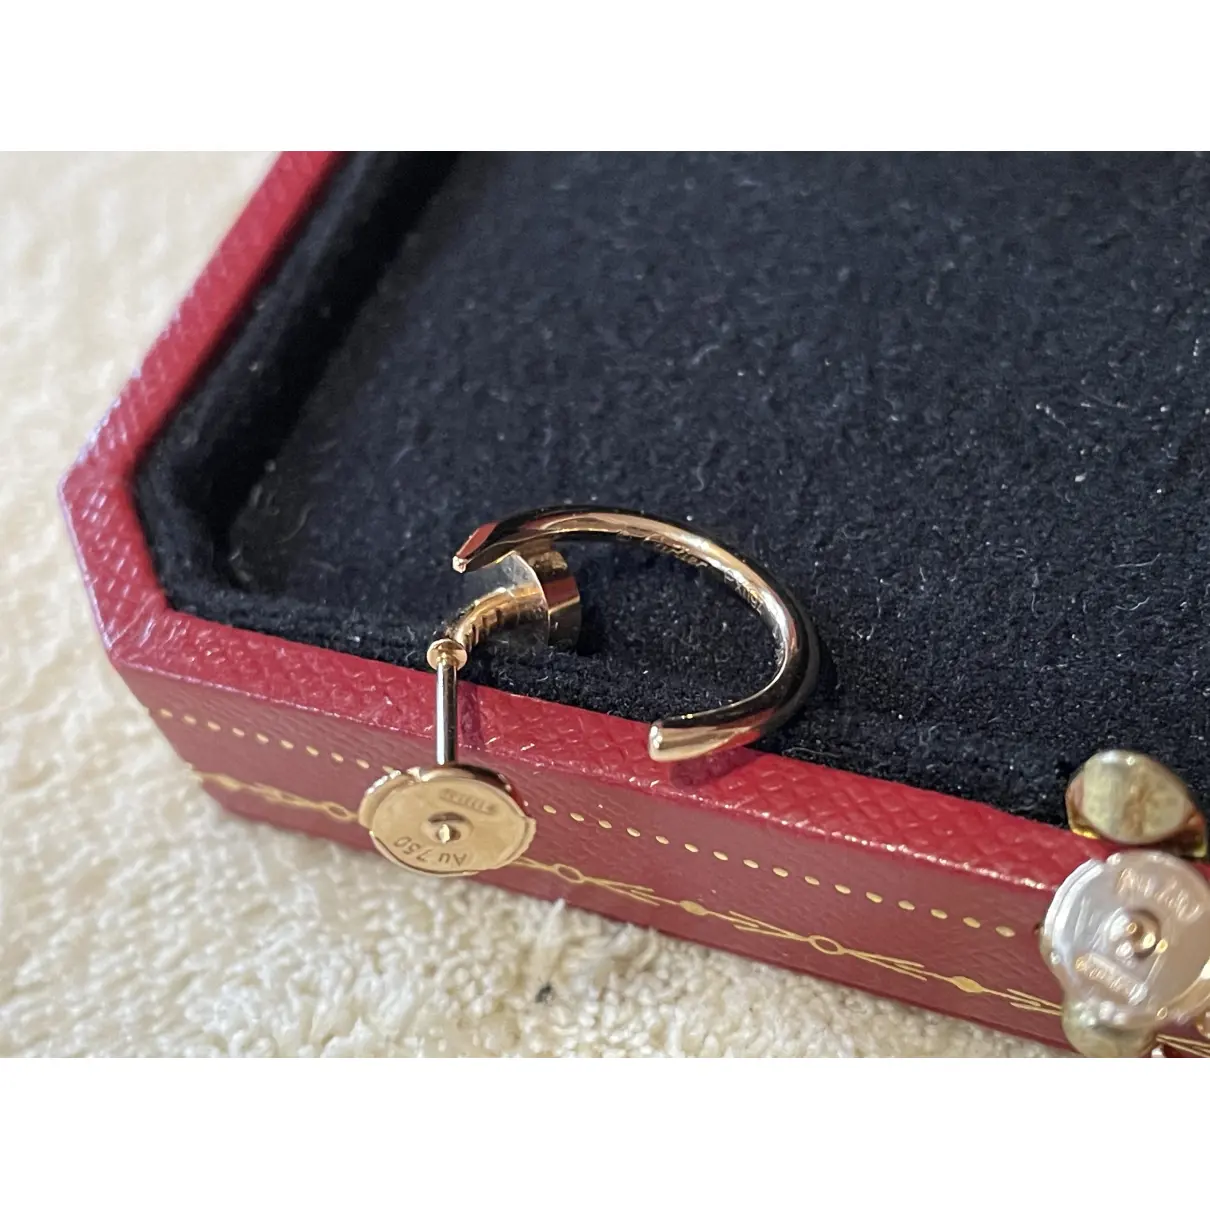 Buy Cartier Juste un Clou pink gold earrings online